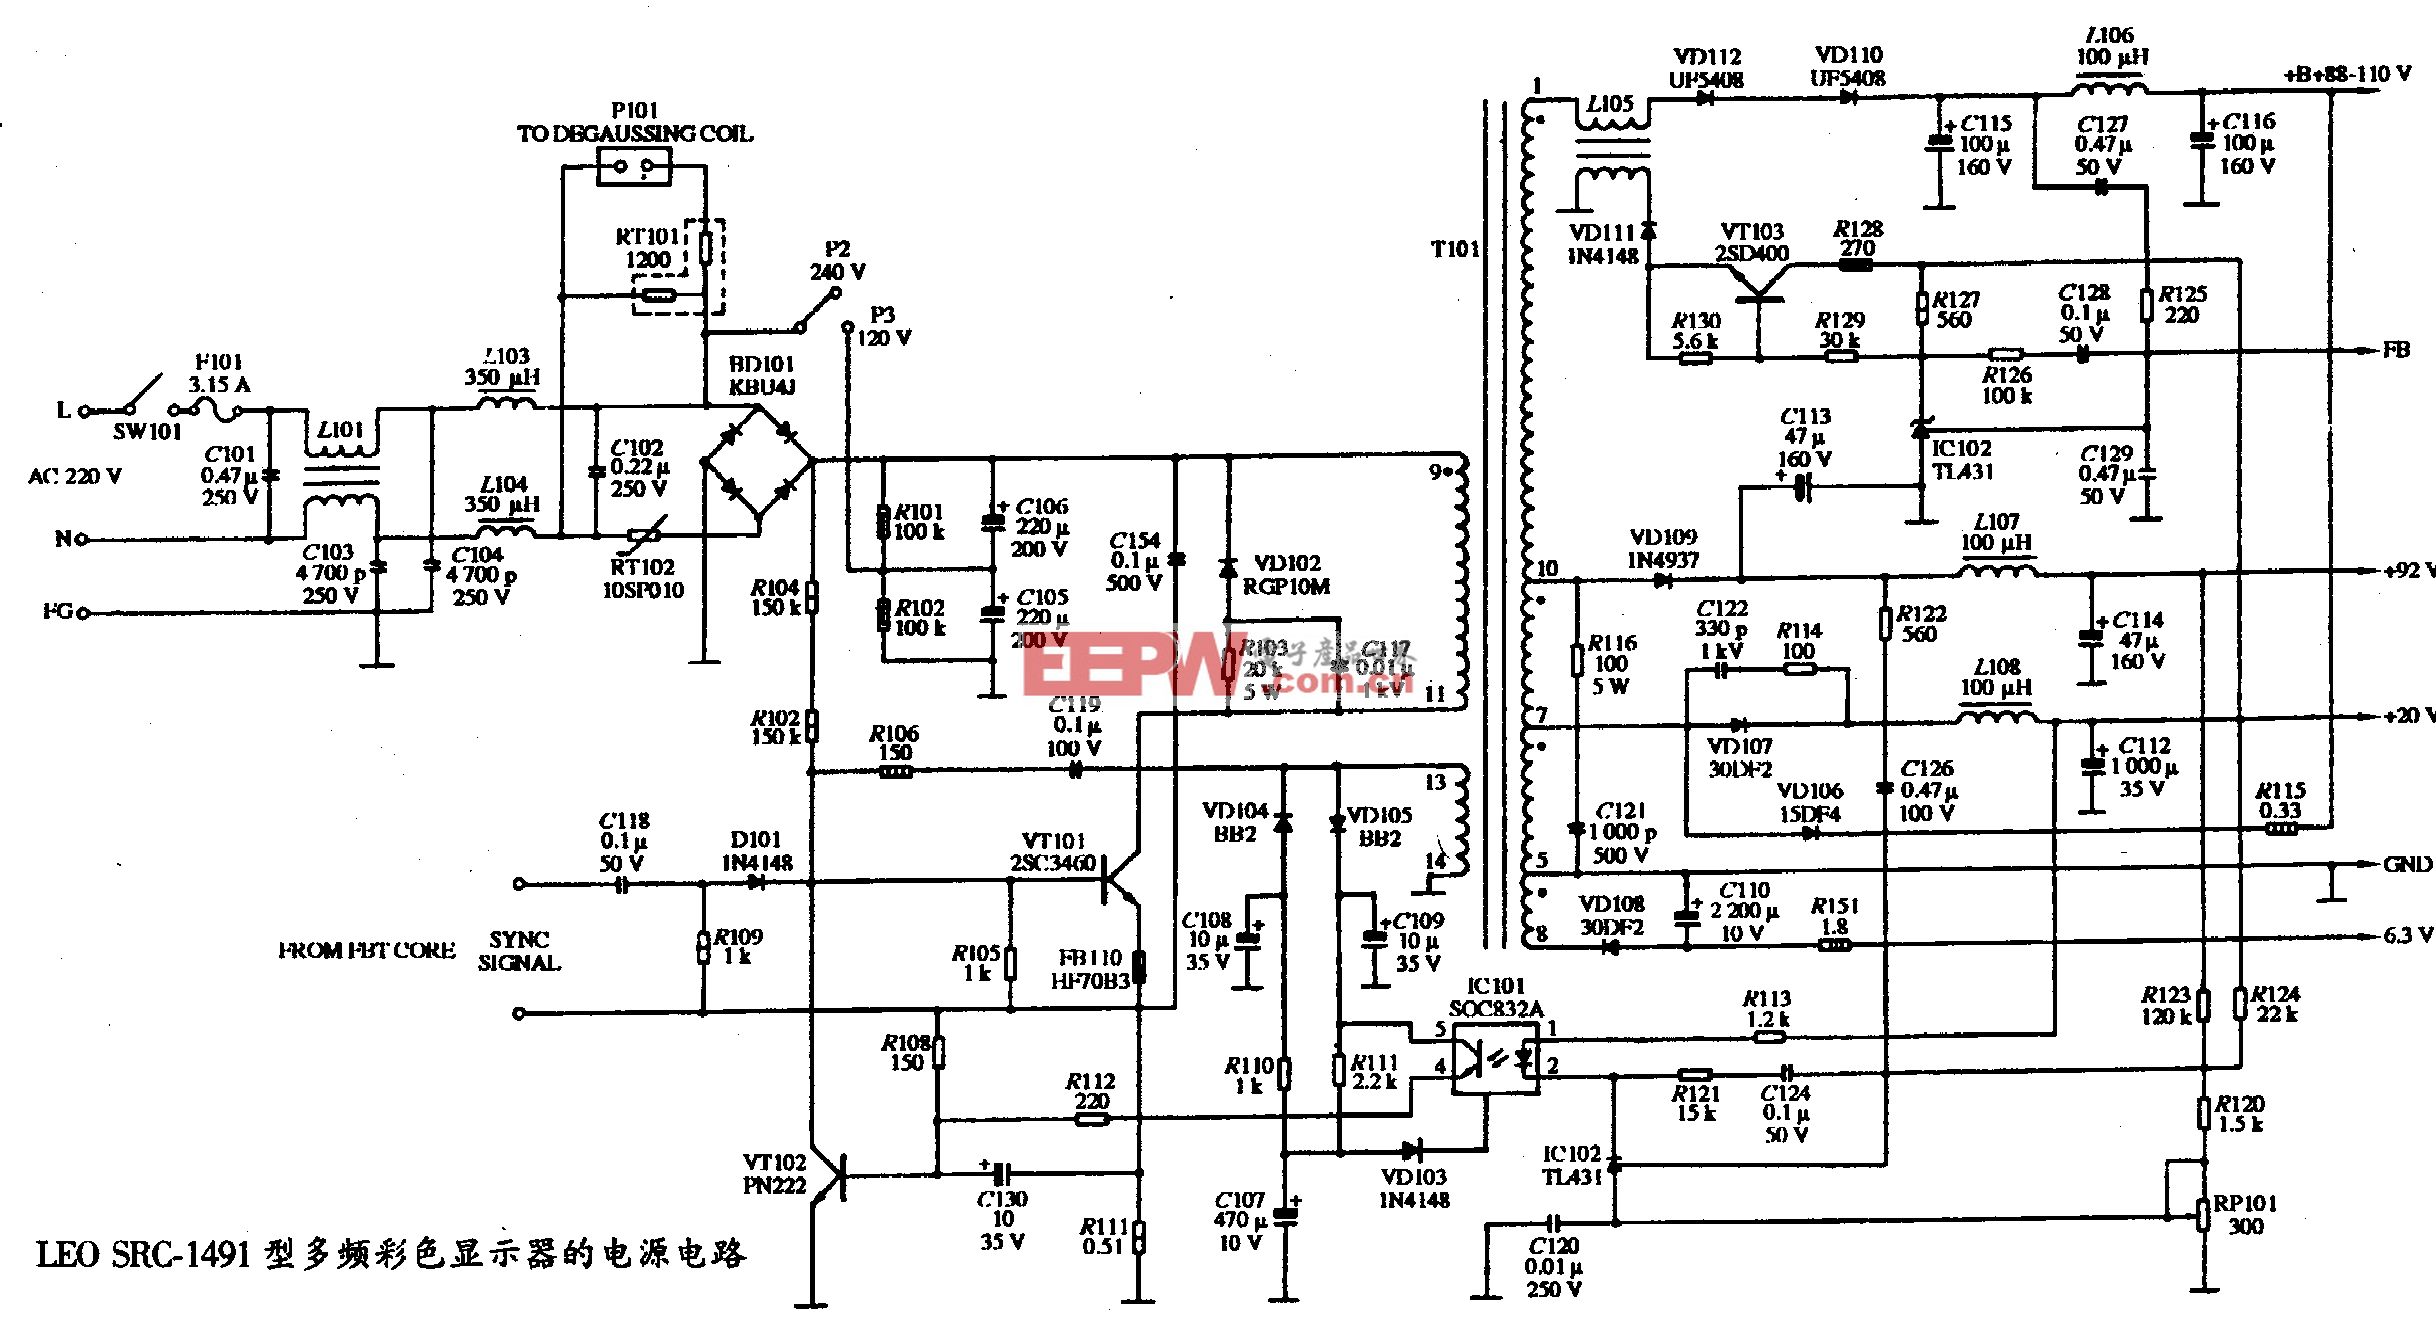 66、LEO SRC-1491型多频彩色显示器的电源电路图